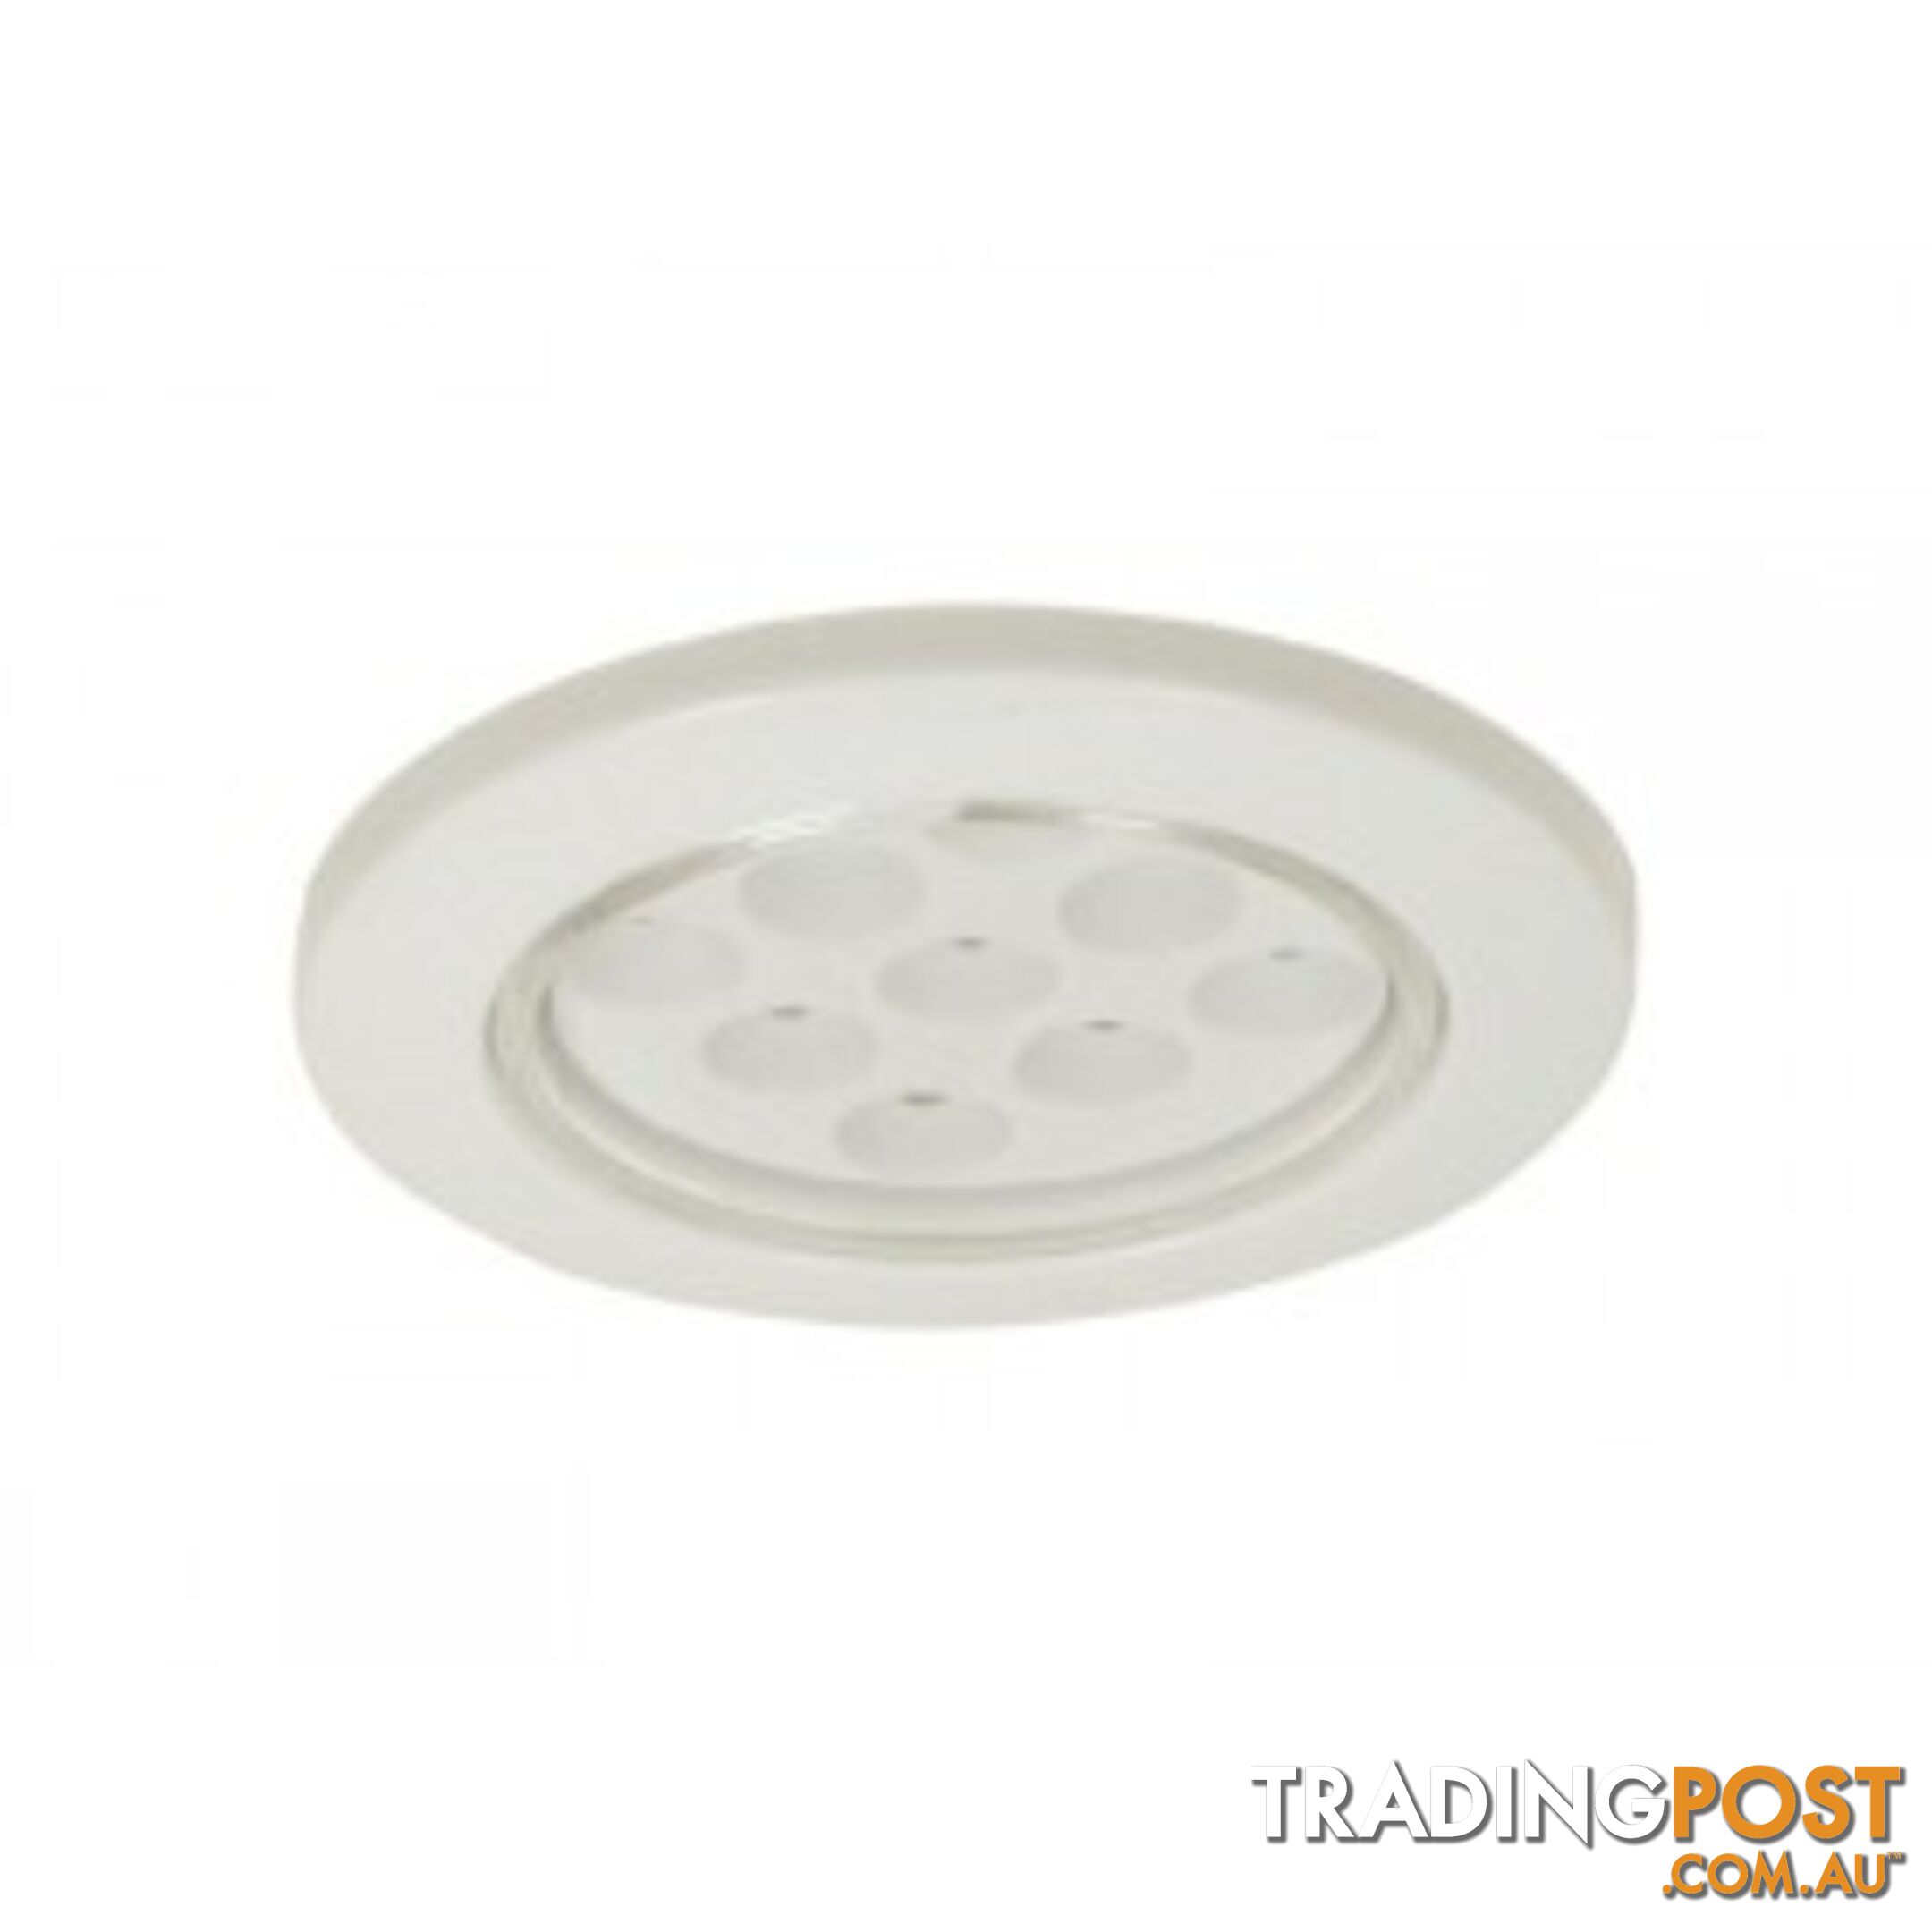 Mini Dome Light - LED Recessed - 122382